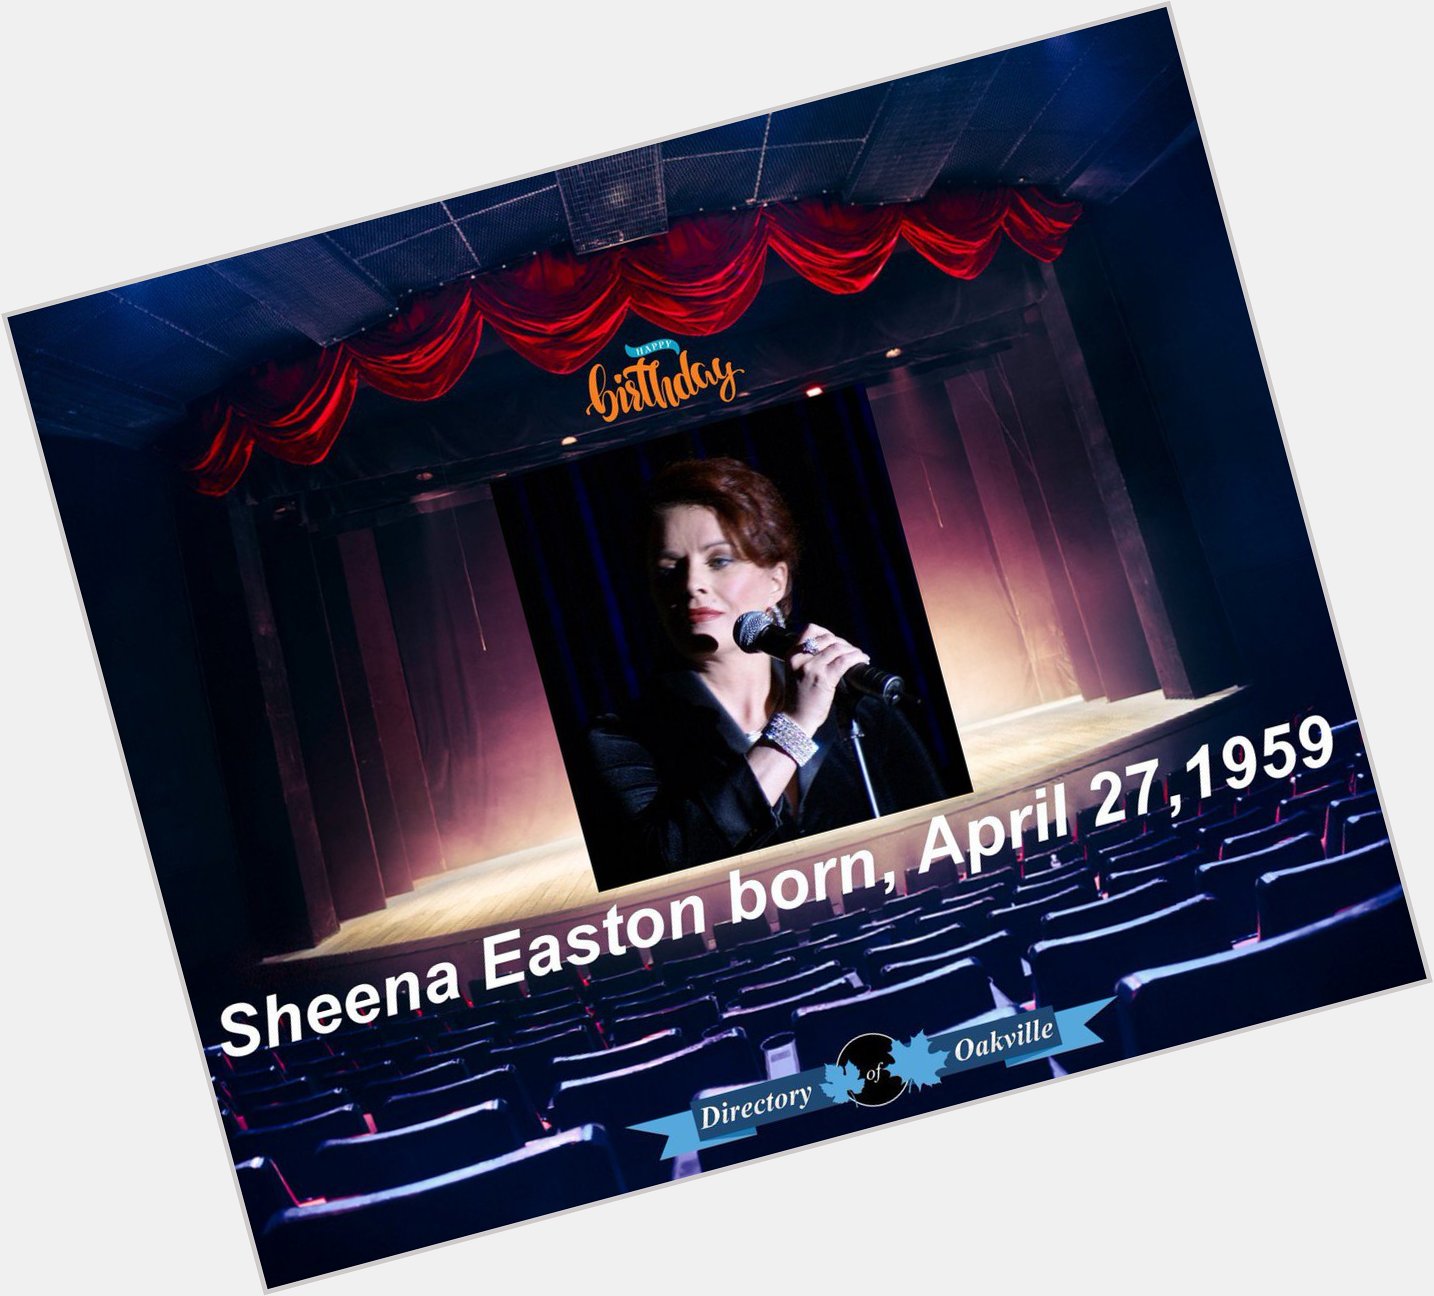 Happy Birthday! Sheena Easton born, April 27,1959 